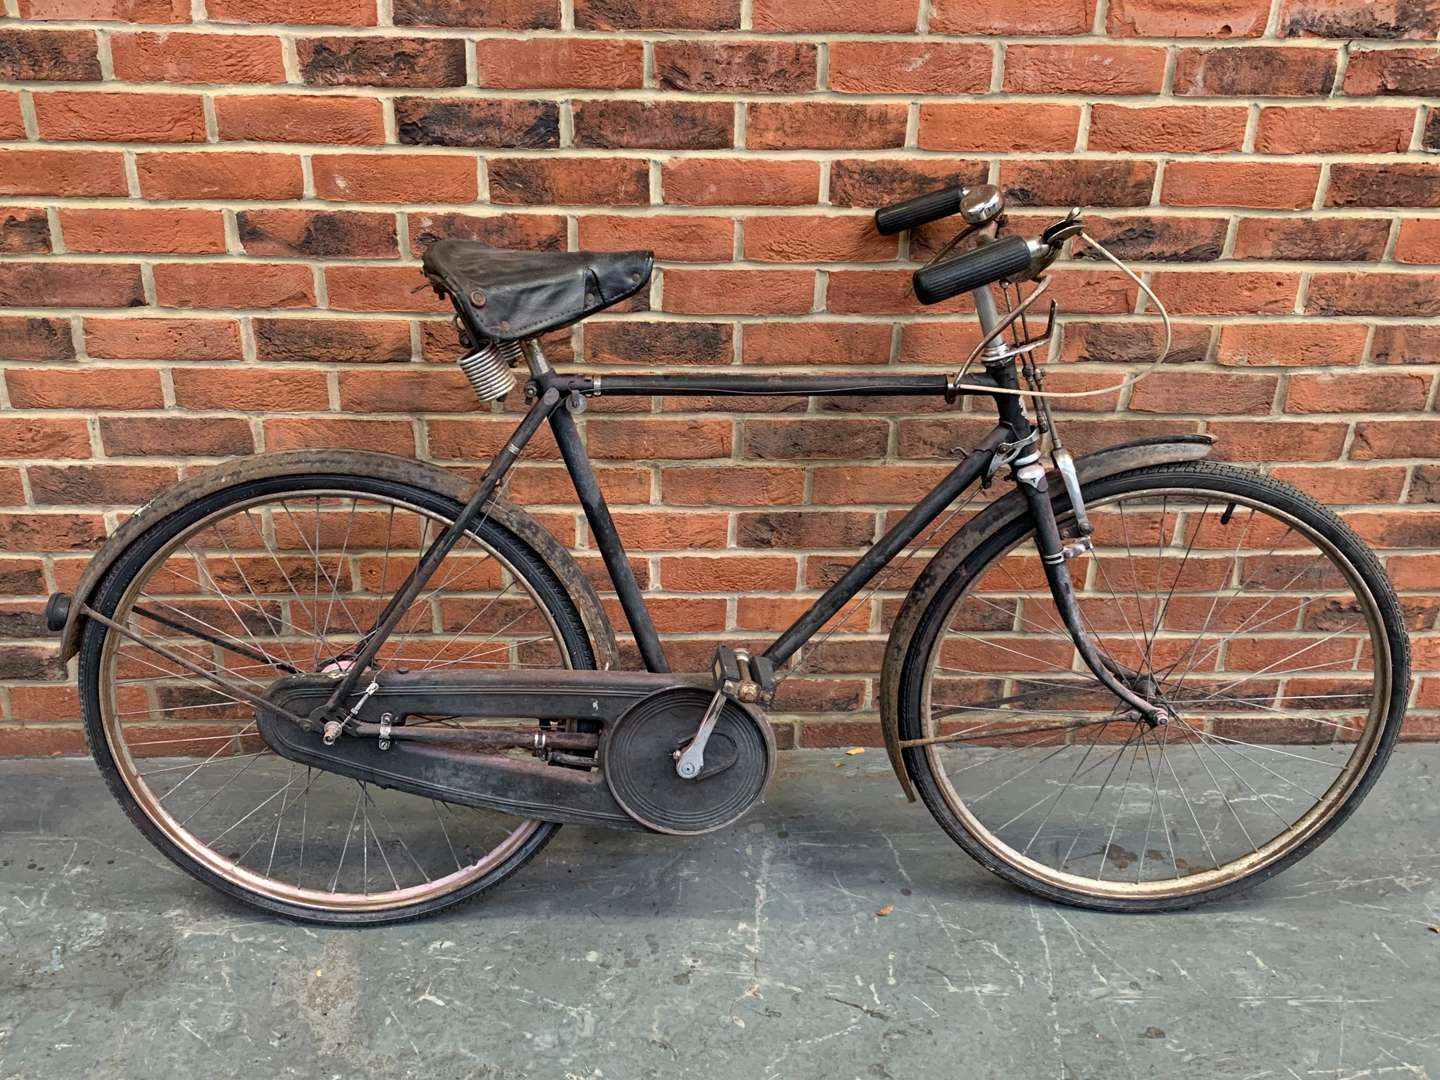 <p>Two Vintage Gents Bicycles&nbsp;</p>